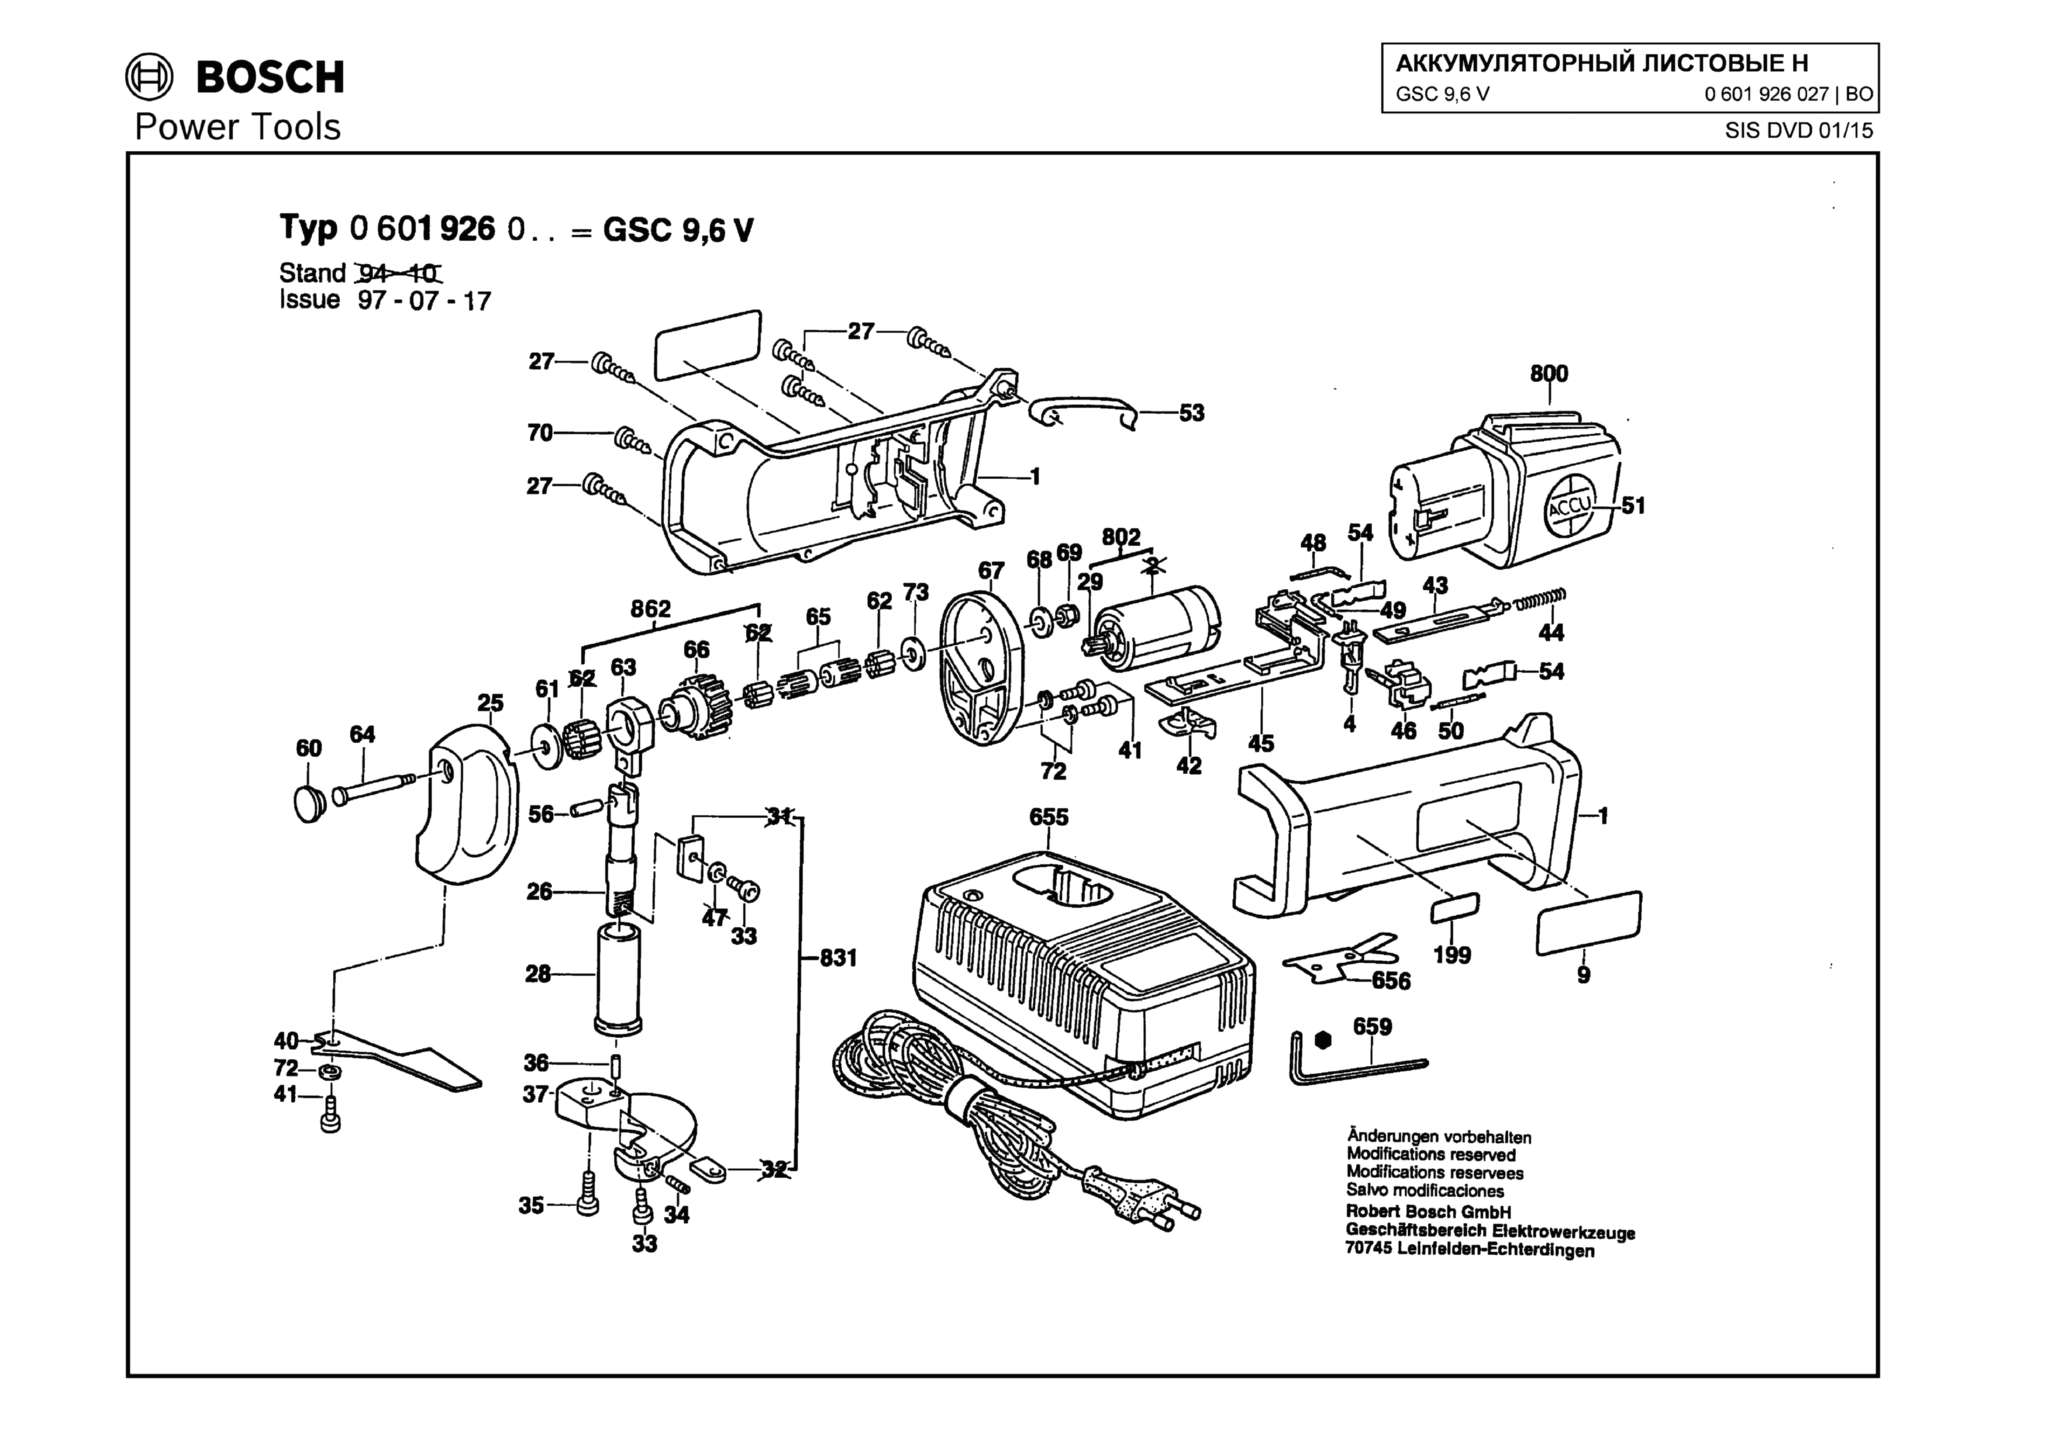 Запчасти, схема и деталировка Bosch GSC 9,6 V (ТИП 0601926027)